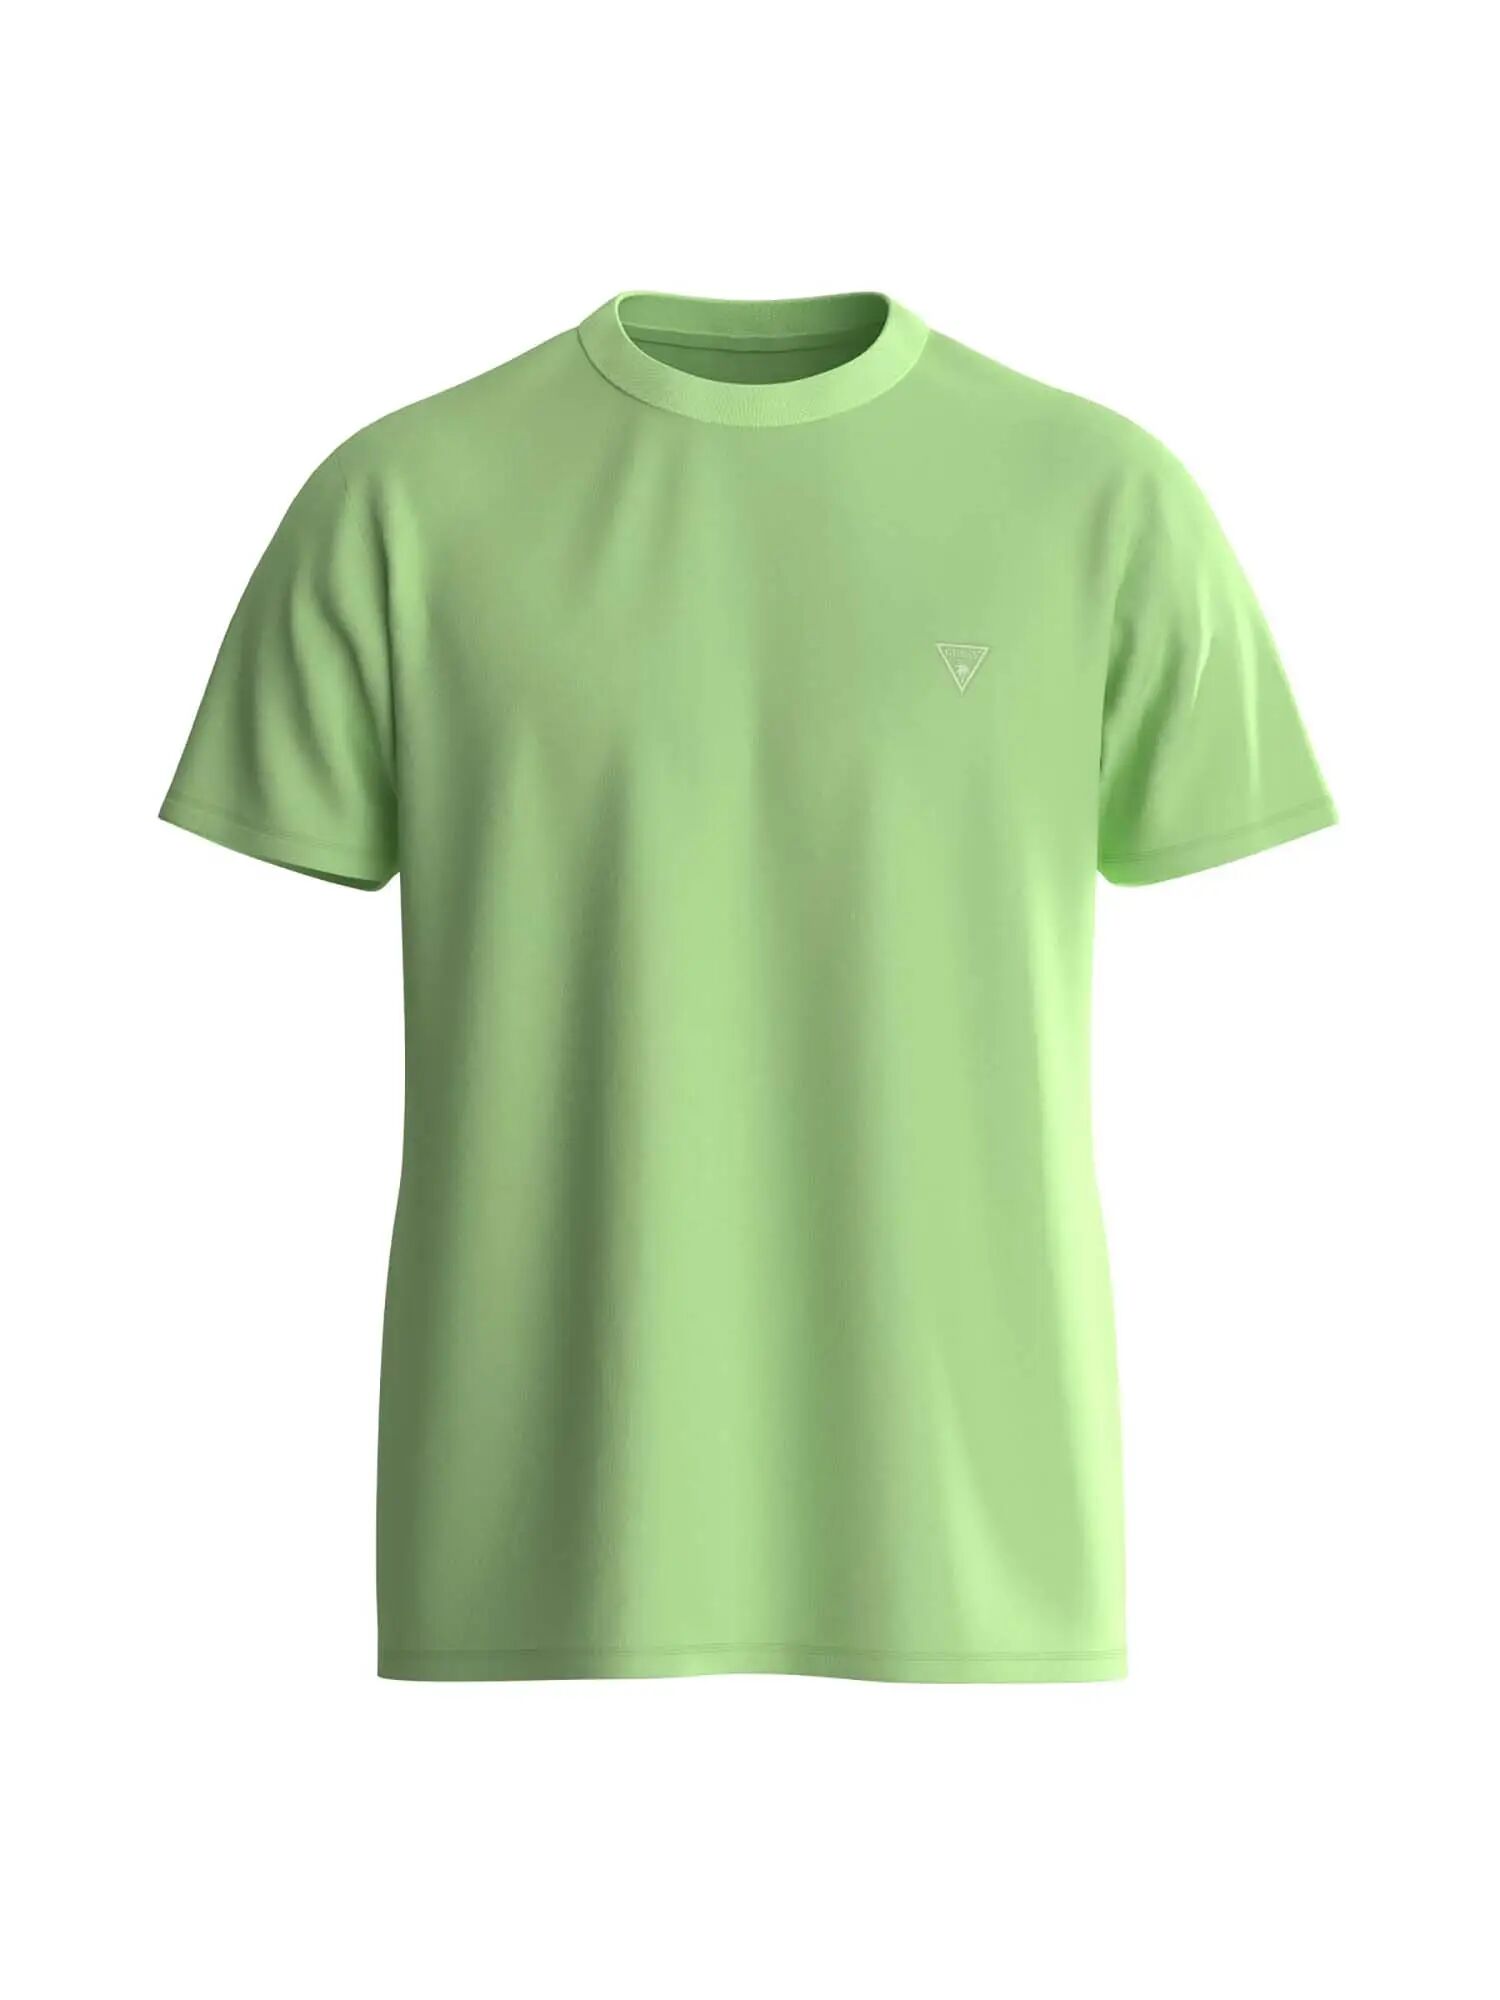 Guess T-shirt Uomo Colore Verde VERDE S